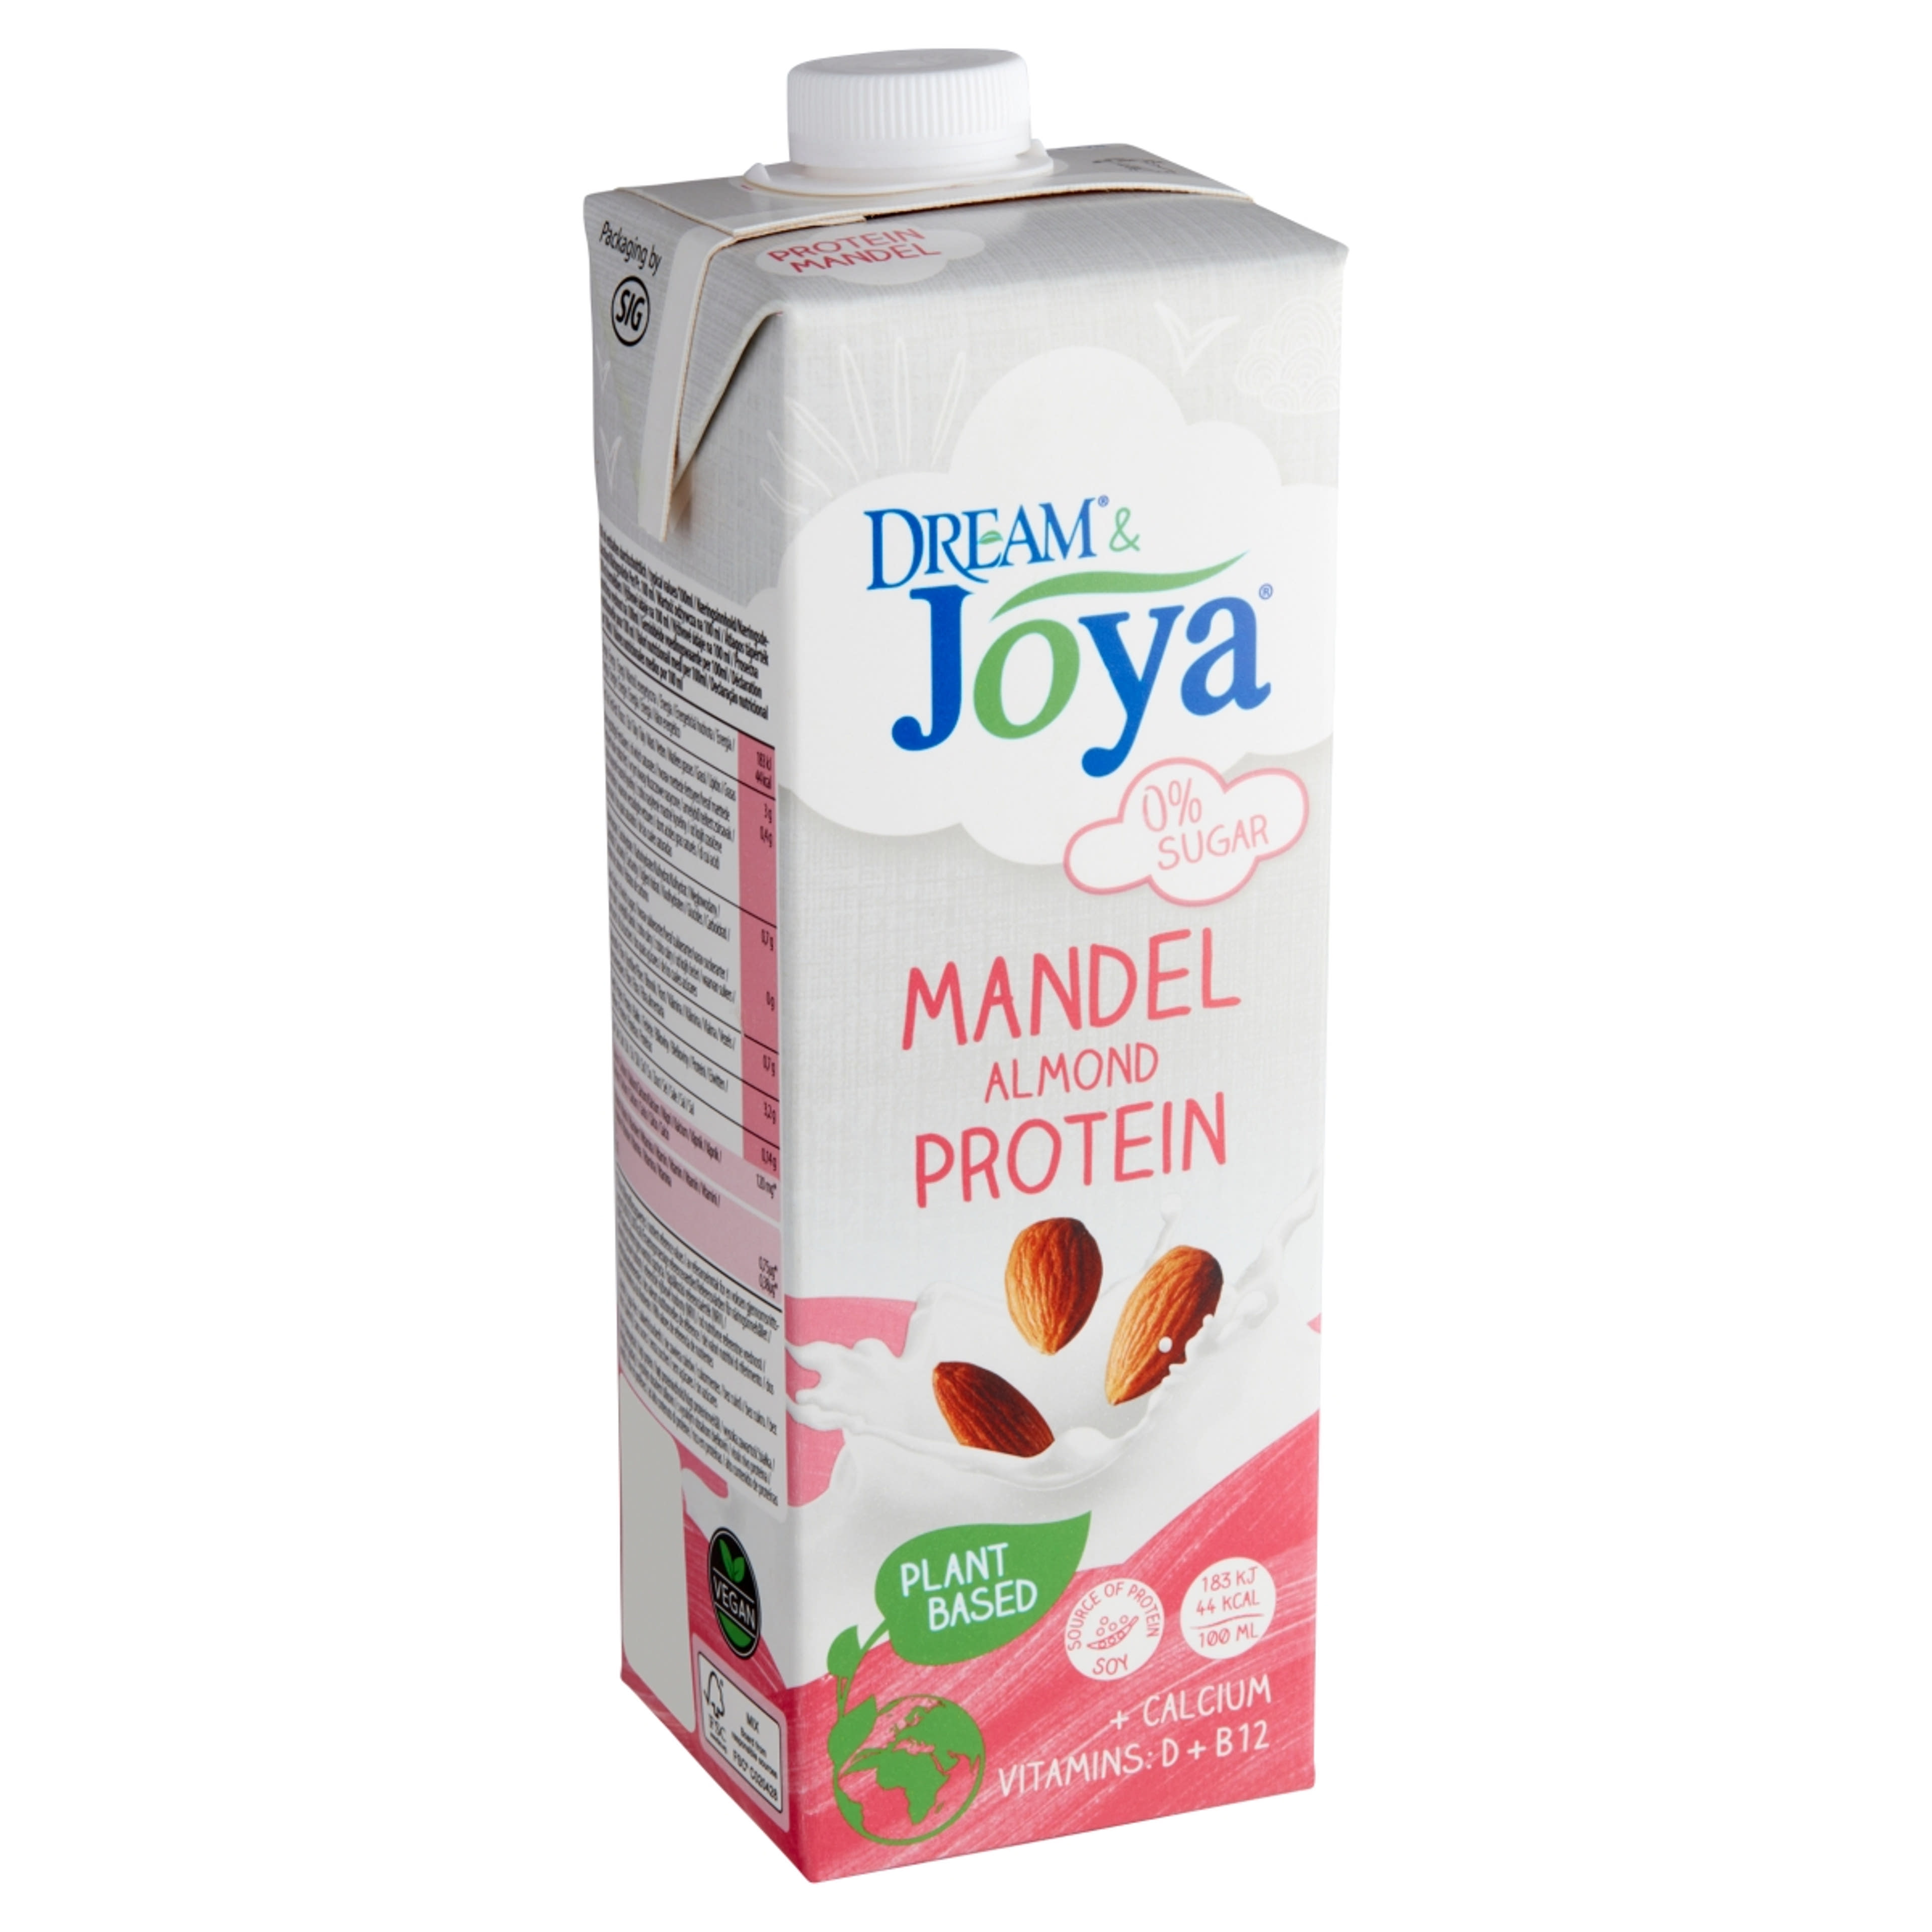 Joya dream mandula protein uht - 1 l-2